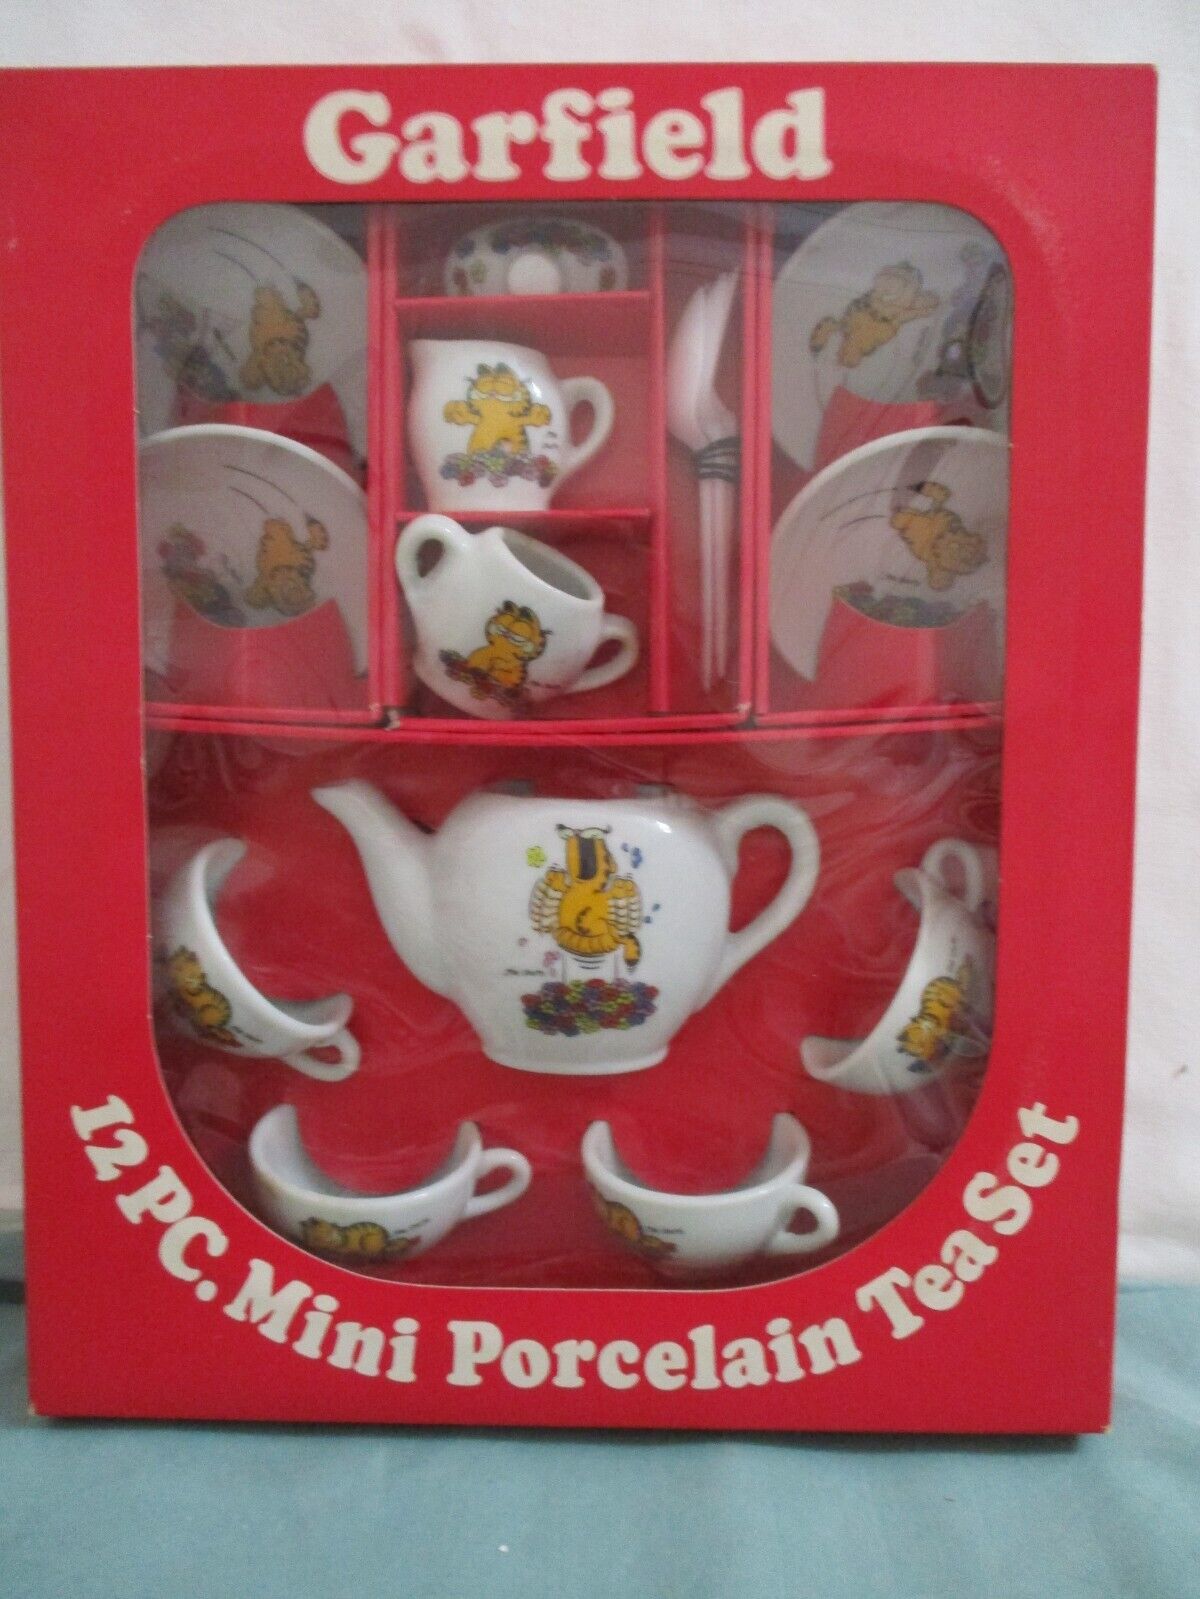 Enesco 1978 Garfield miniature porcelain 12 piece tea set new